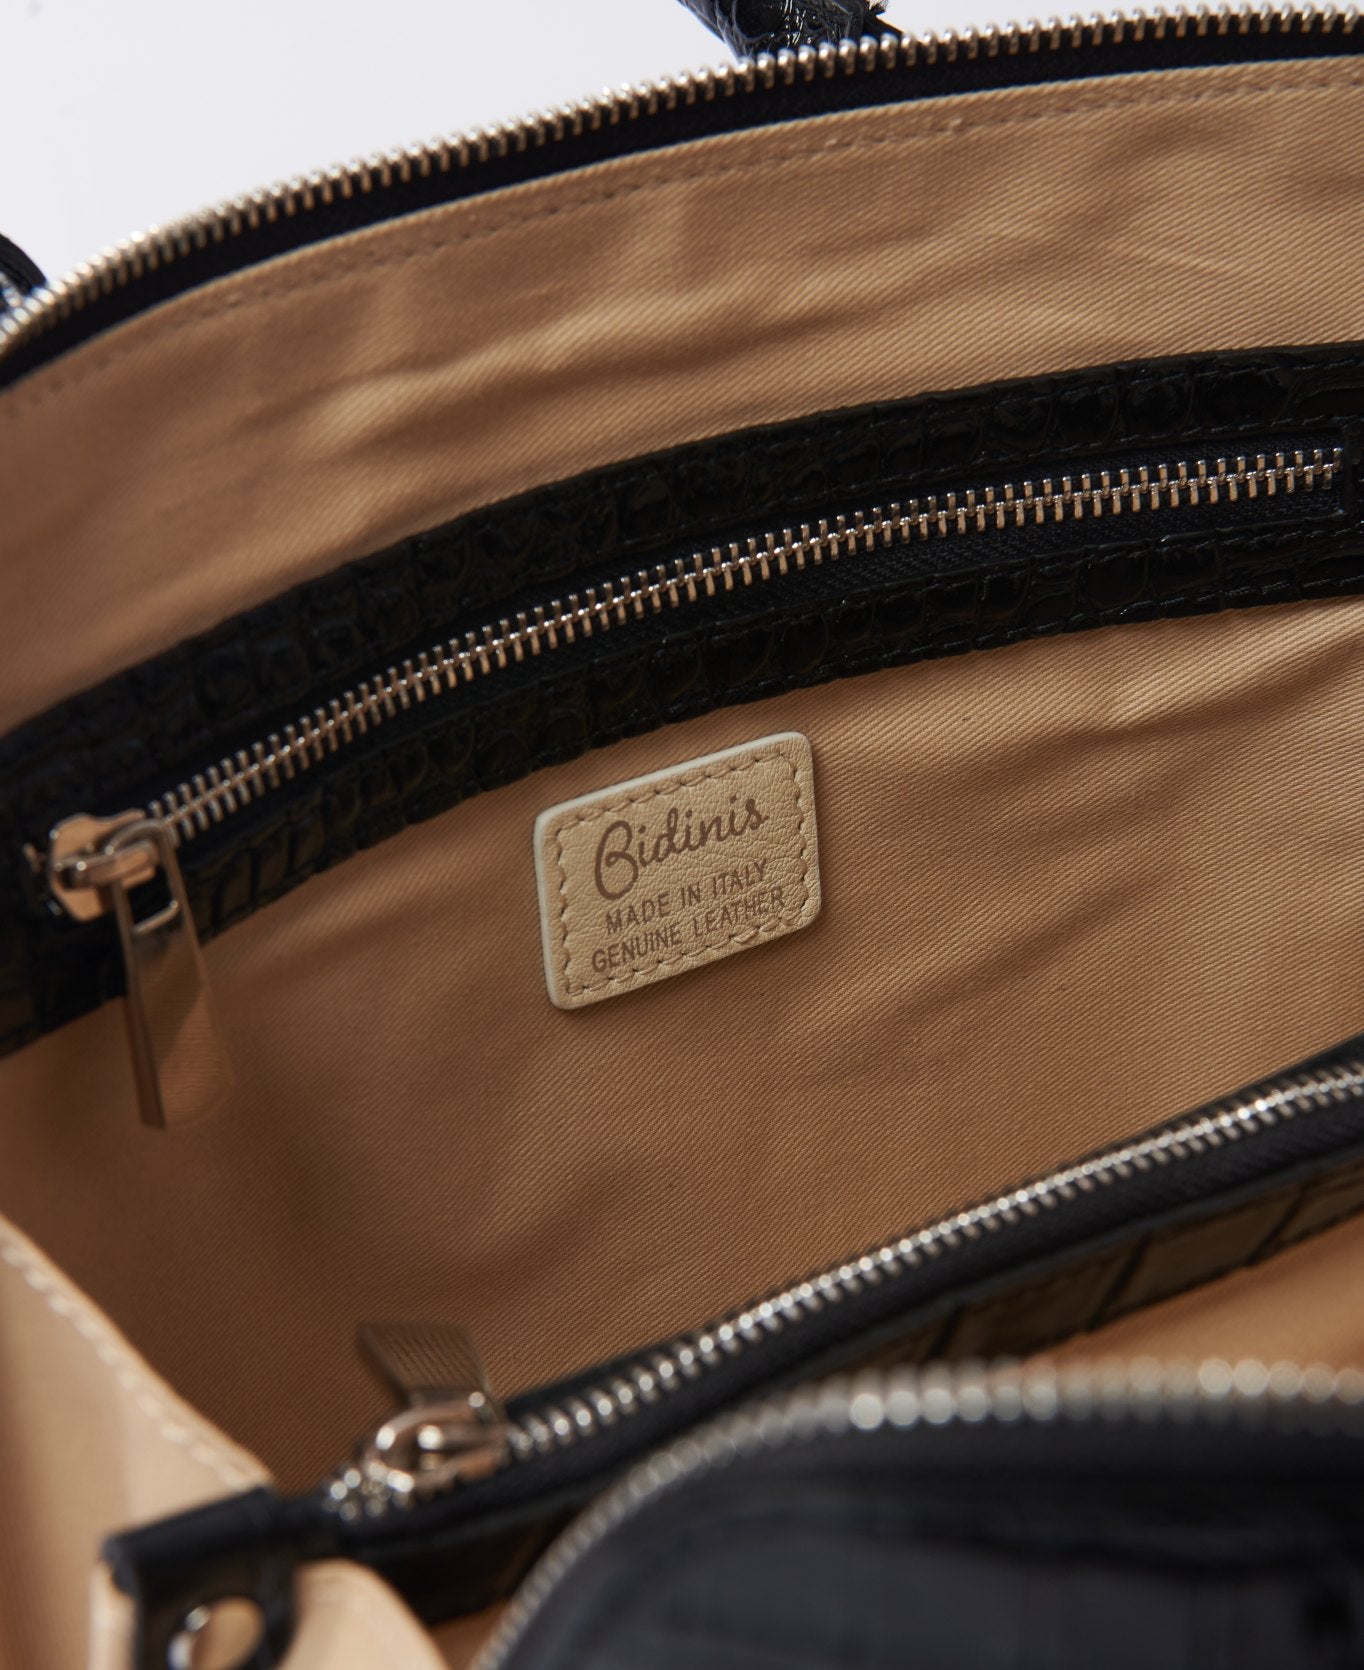 cocco leather bag, black leather bag, Italian leather handbag, well-organised interior bag, lightweight leather bag, bidini bags, leather bag